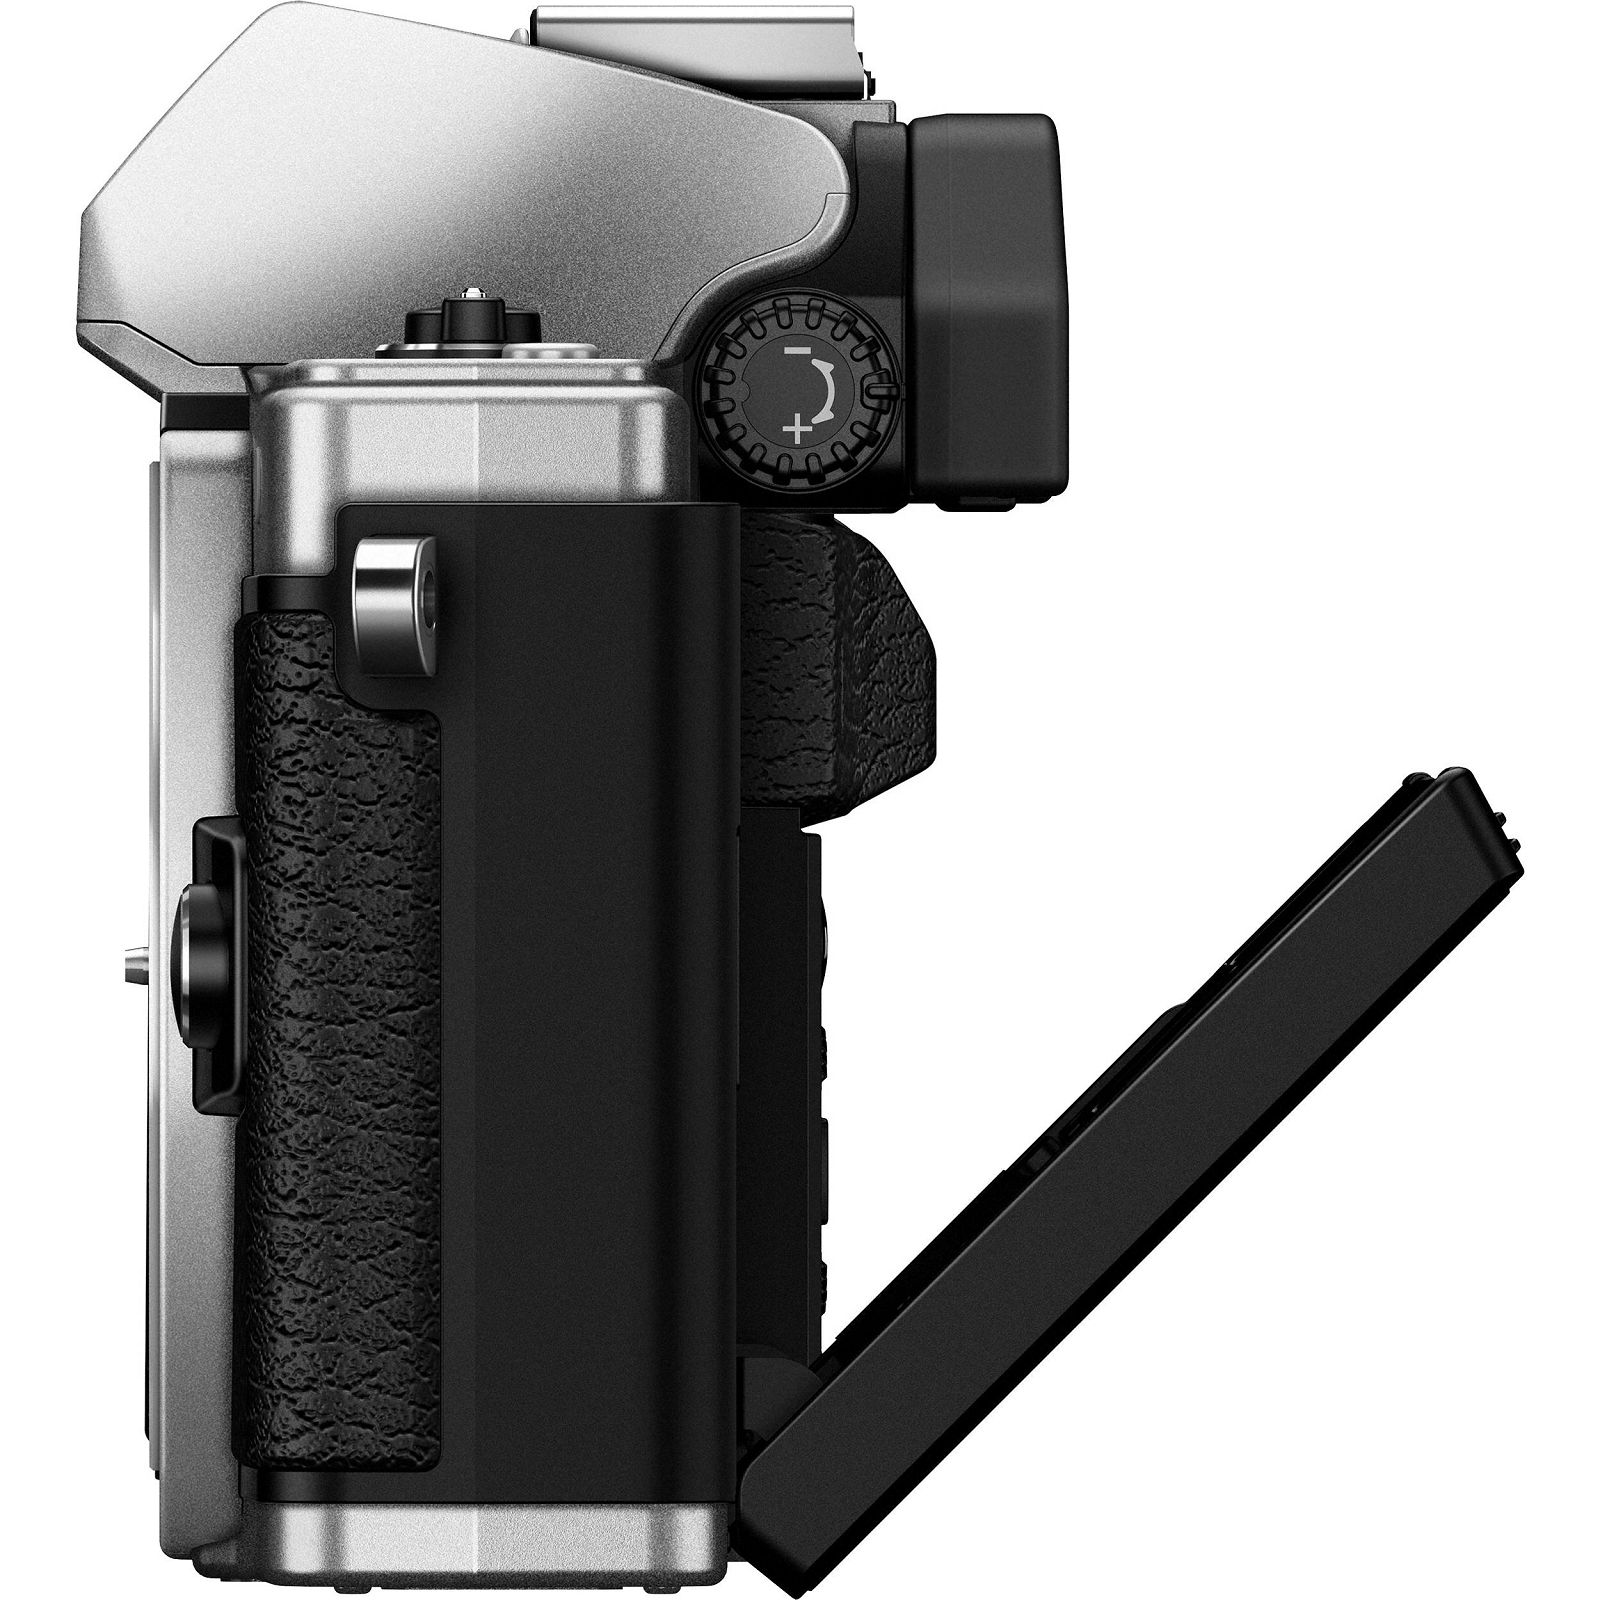 Olympus E-M10 II +14-42 Silver srebreni E-M10II 1442 IIR Kit slv/slv 14-42mm Mark EZ-M1442 IIR silver incl. Charger + Battery Micro Four Thirds OM-D Camera digitalni fotoaparat V207051SE000